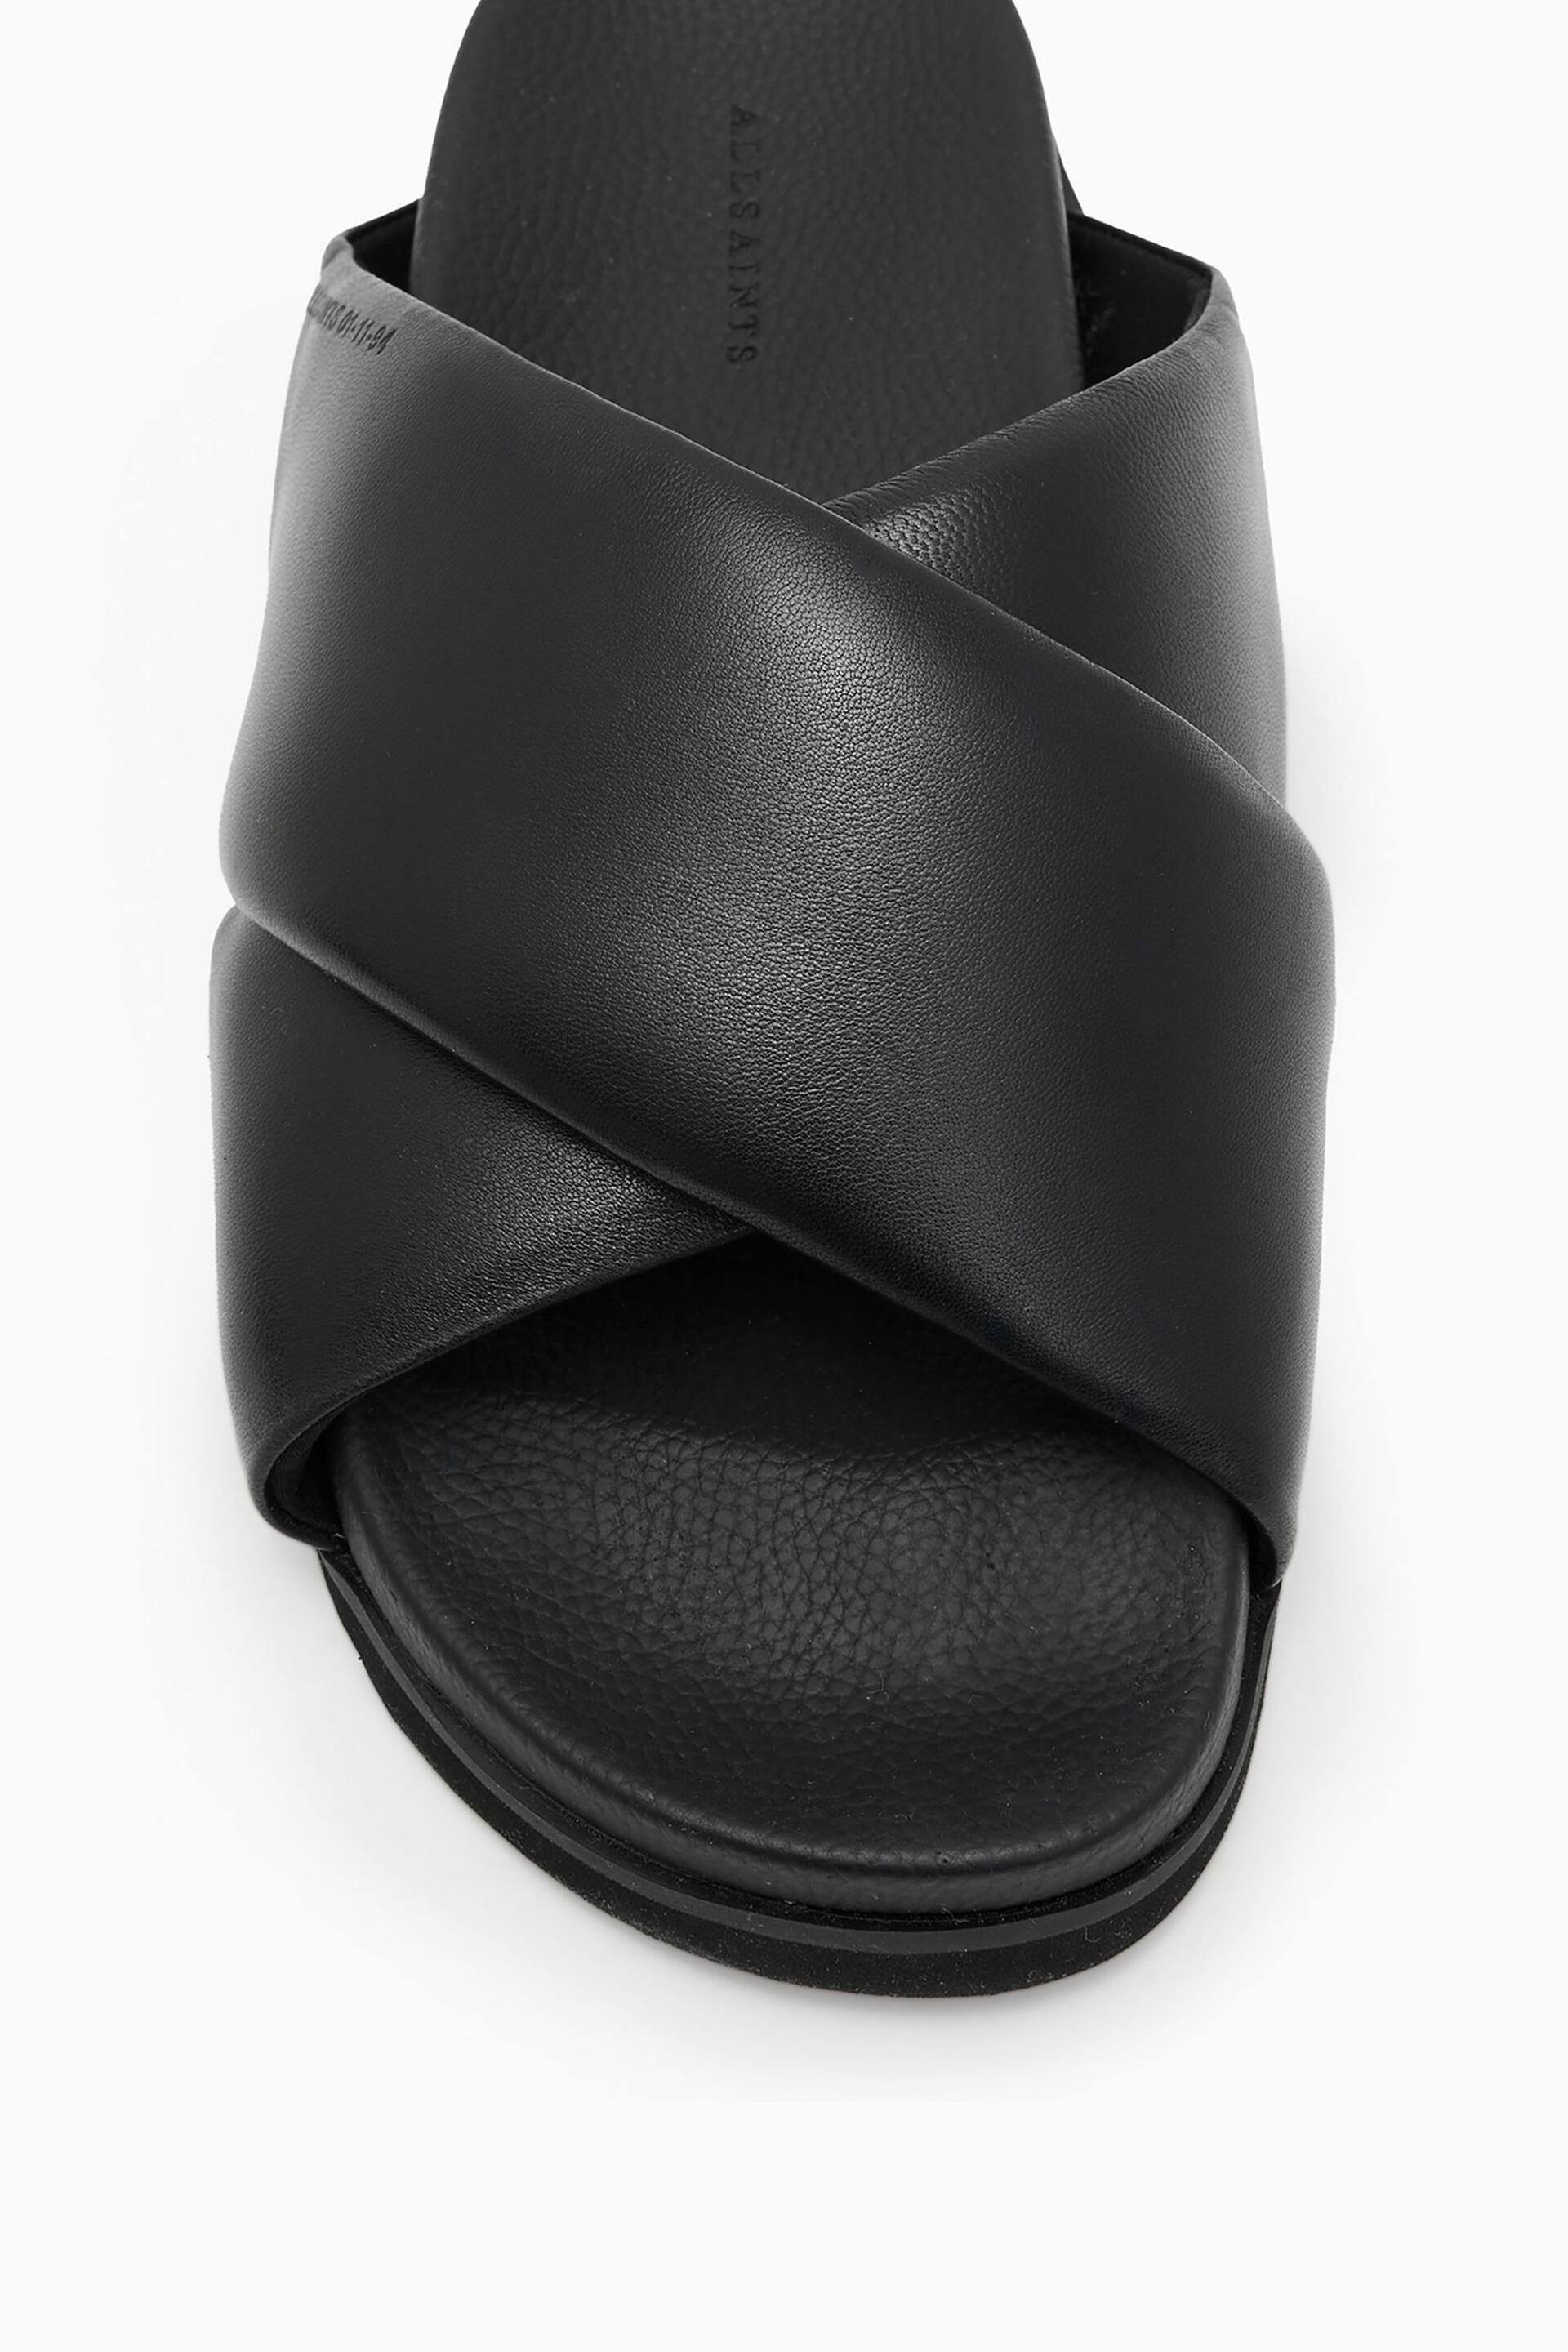 AllSaints Black Saki Sandals - Image 5 of 6